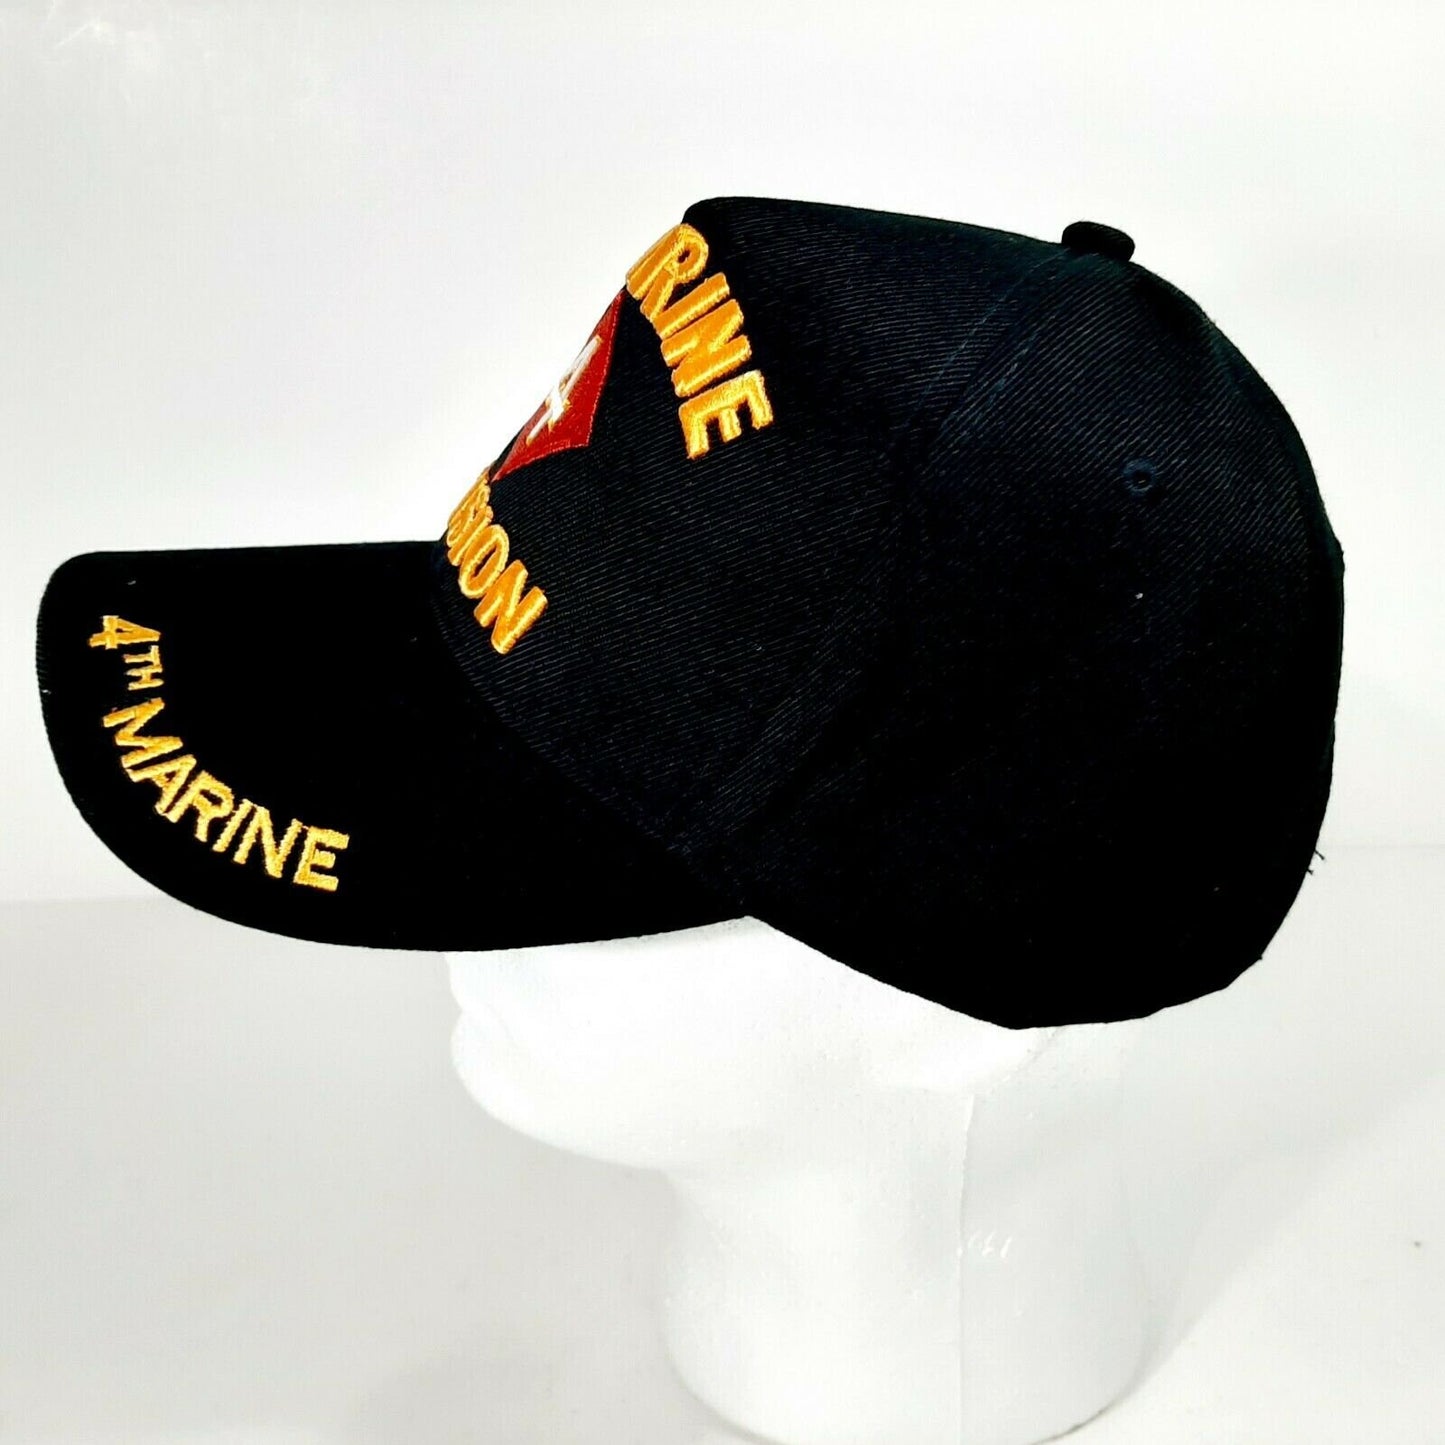 United States Marines 4th Marine Division Men's Ball Cap Hat Black Acrylic